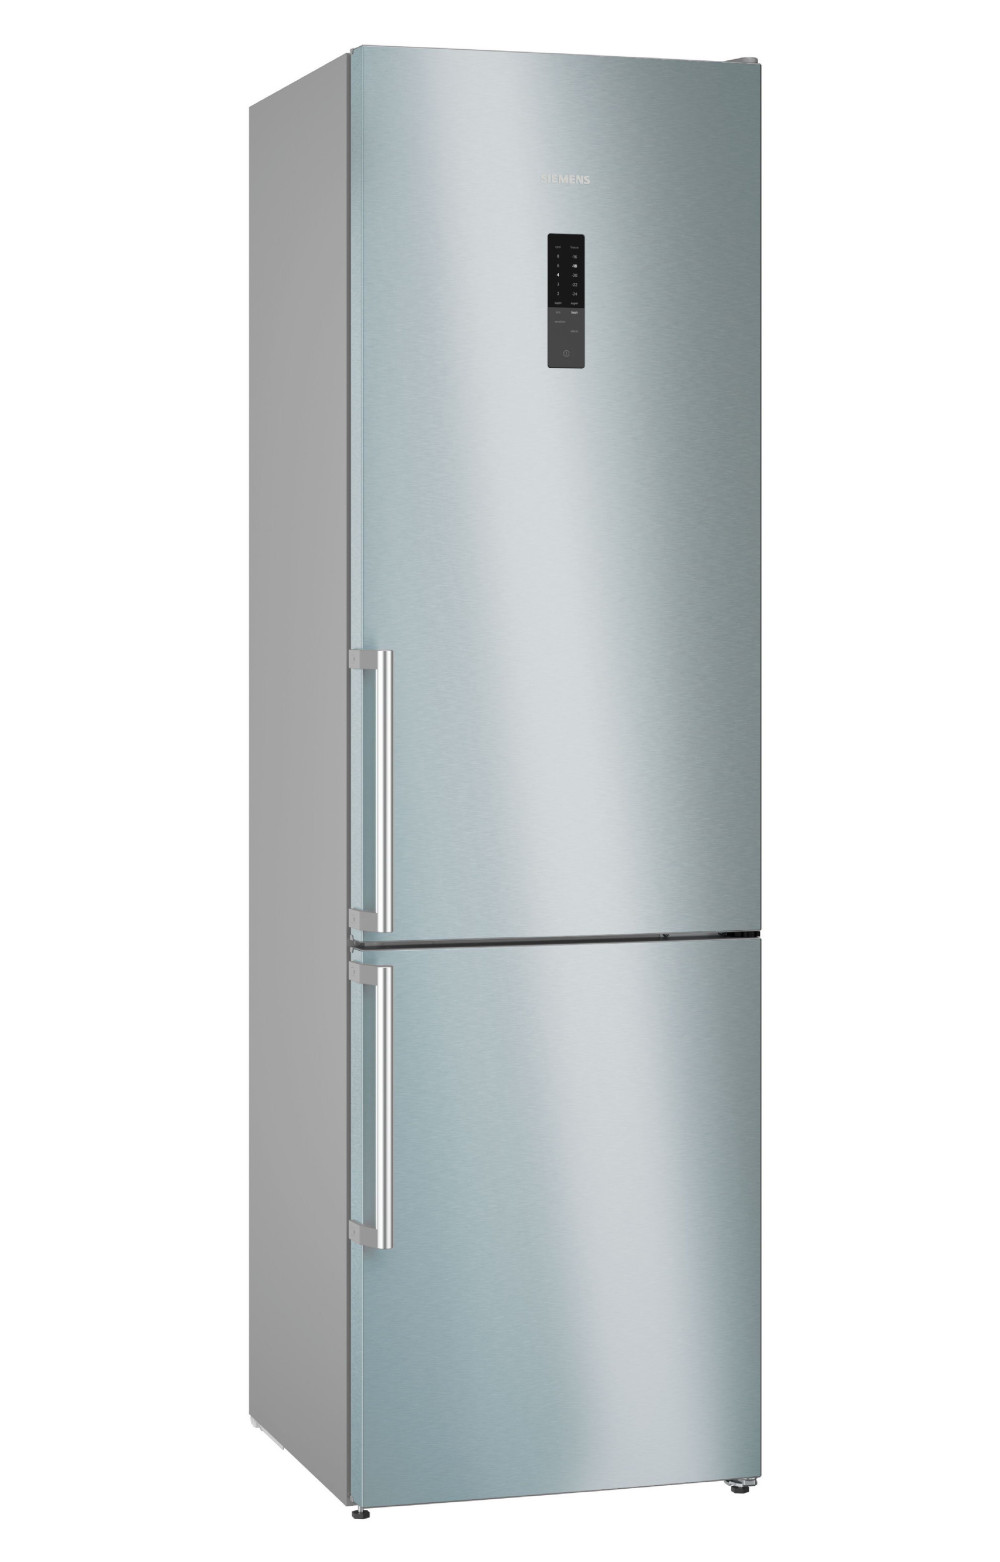 Siemens KG39N7ICTG iQ300 Freestanding Fridge Freezer featured image